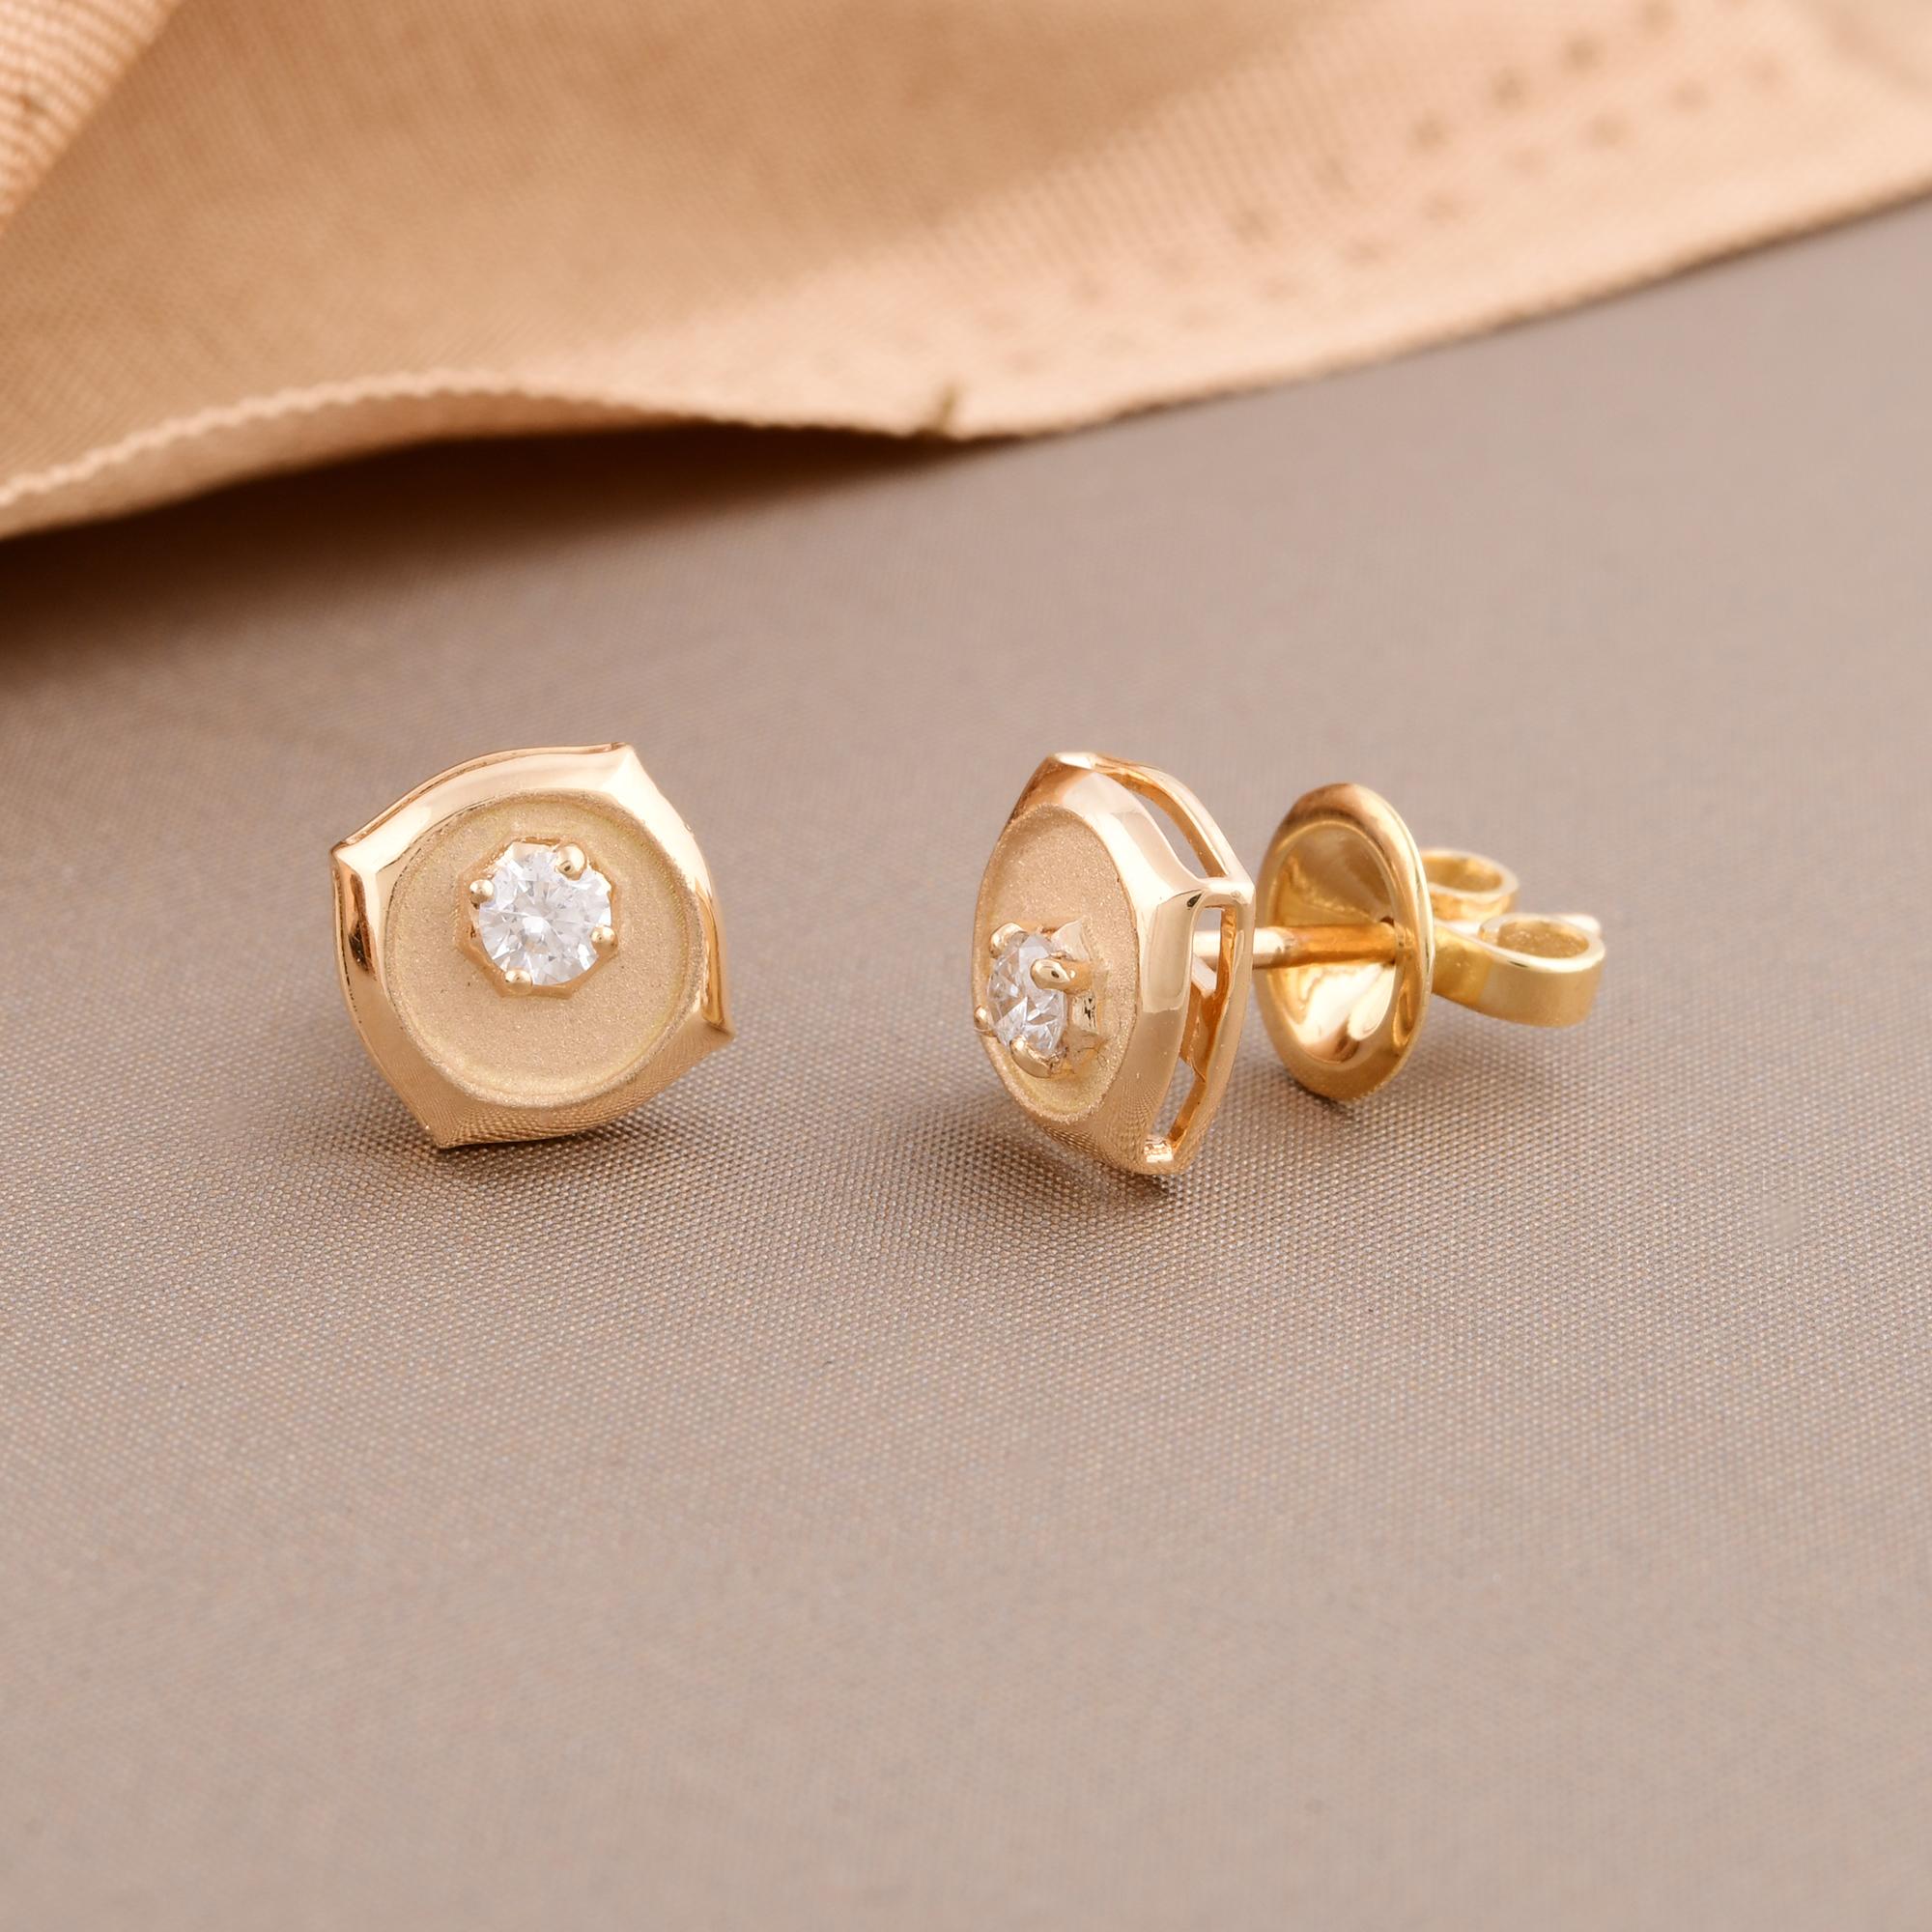 Round Cut 0.20 Carat Round Diamond Stud Earrings 18 Karat Yellow Gold Handmade Jewelry For Sale